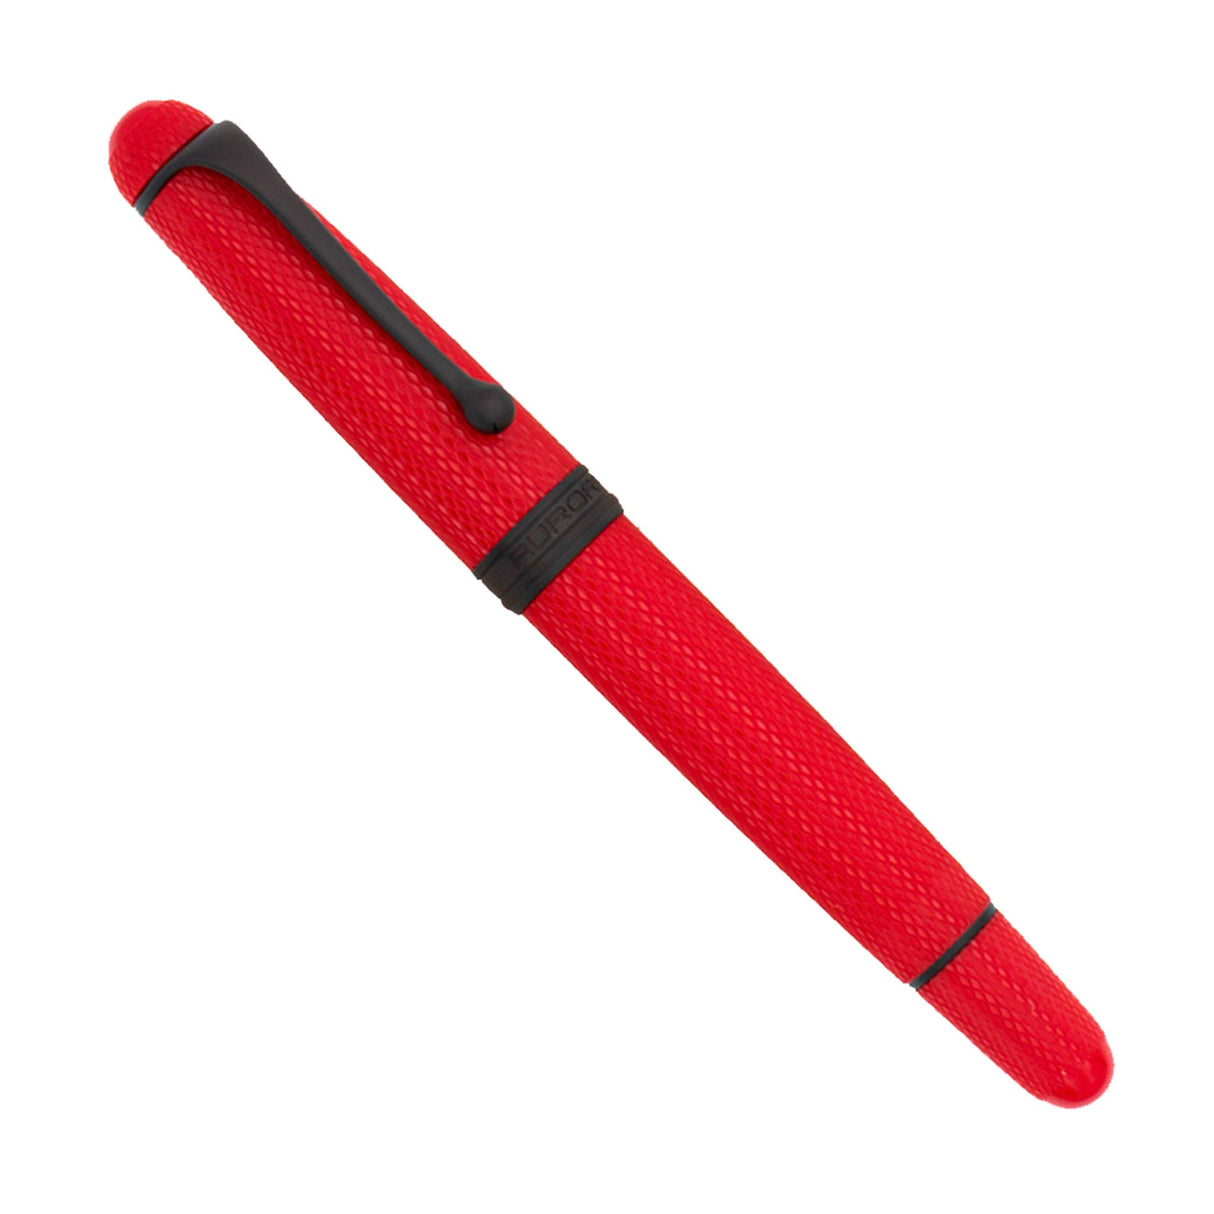 Aurora 88 Red Mamba Limited Edition Red Mamba - Fountain Pen